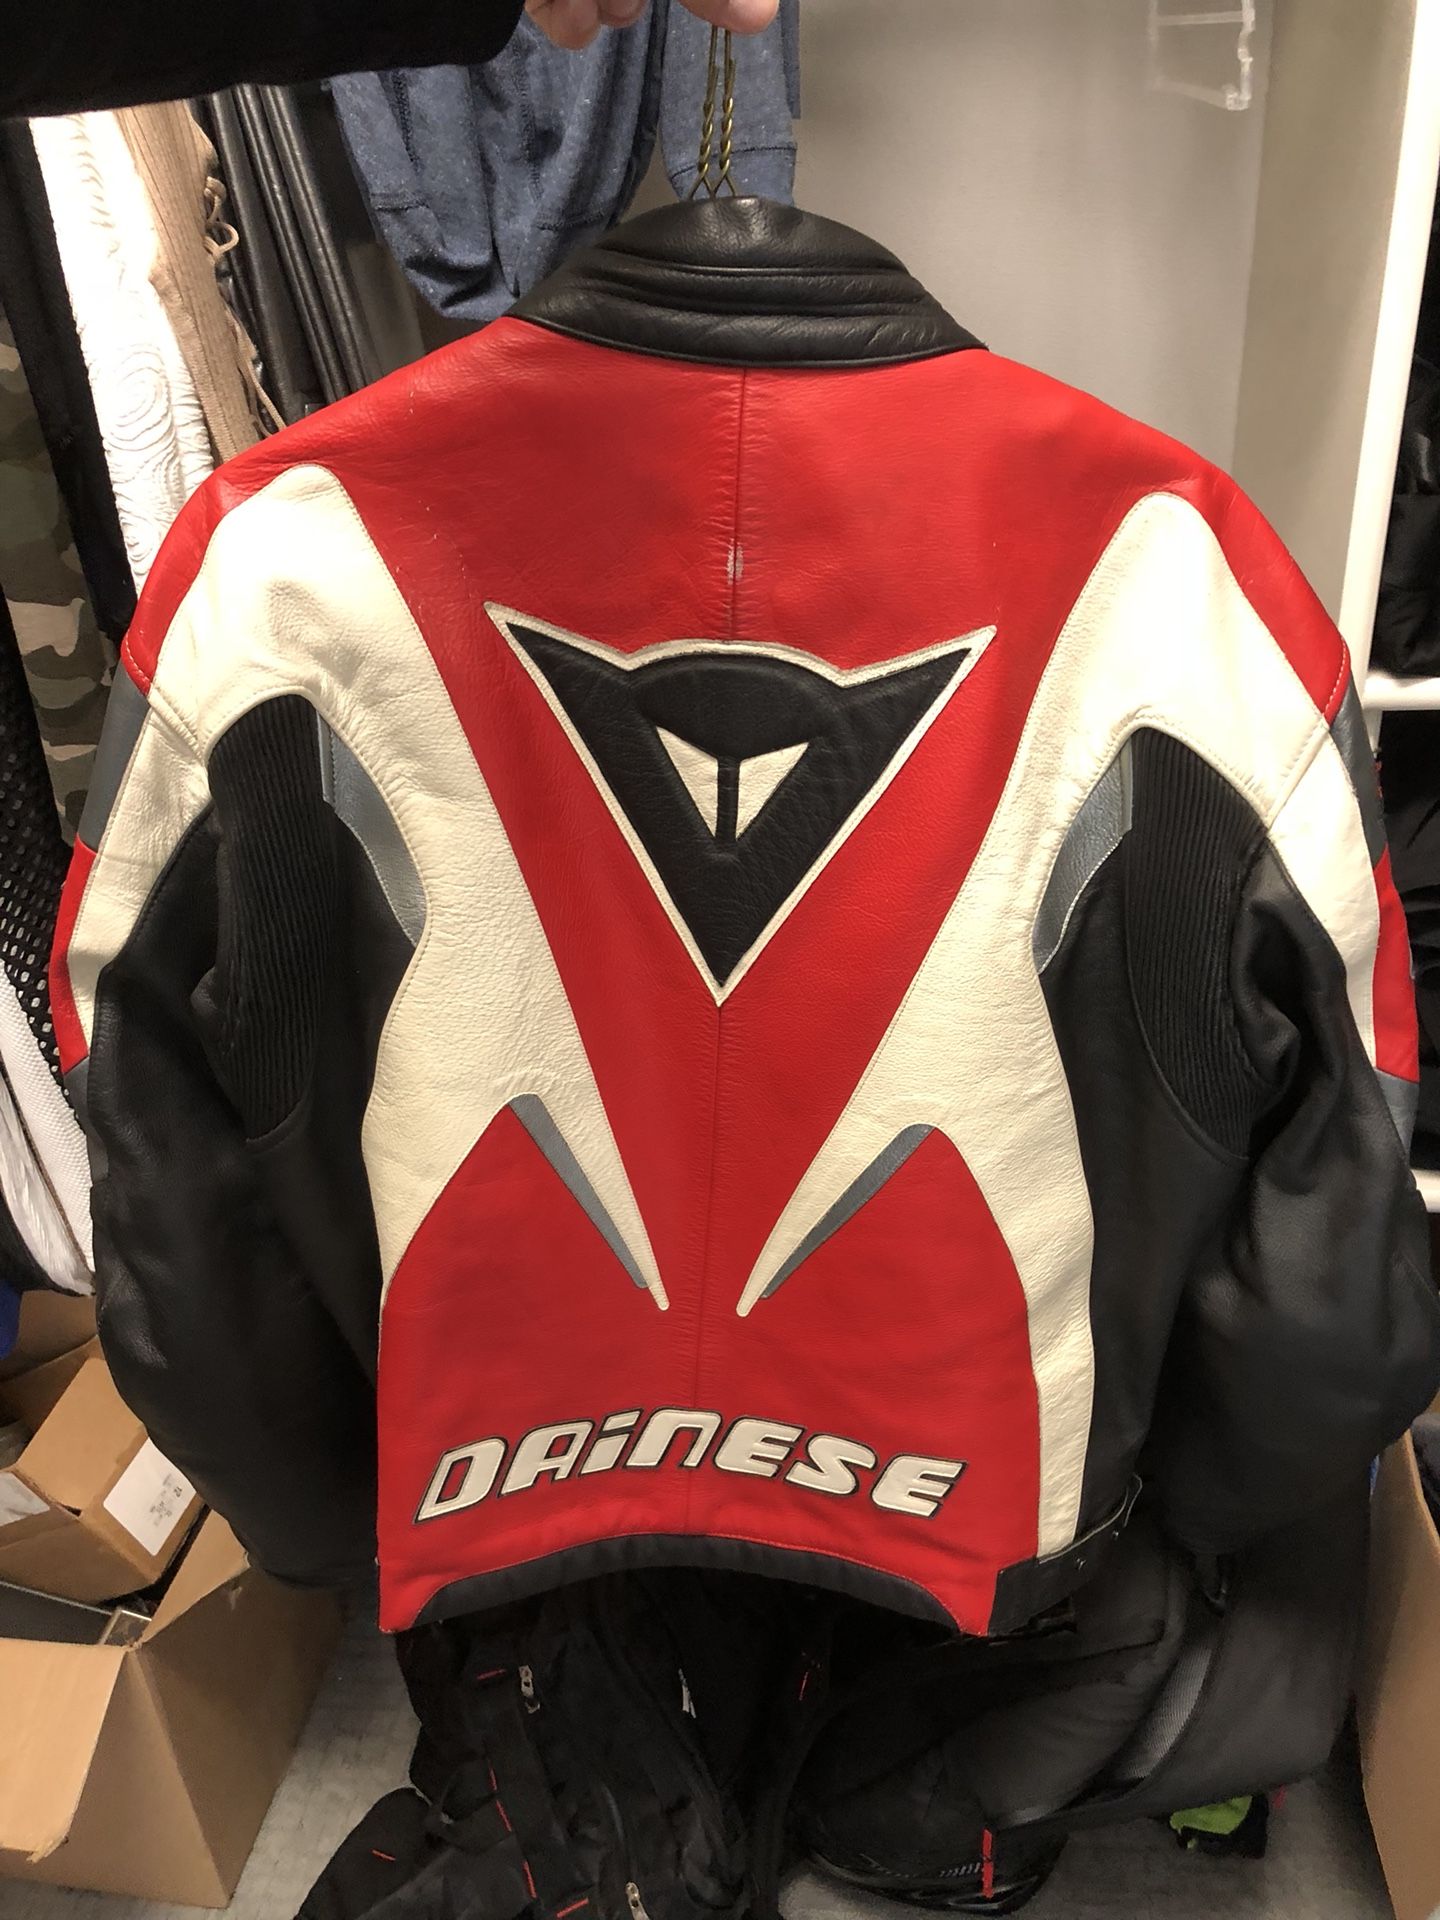 Dainese motorcycle track jacket - professional